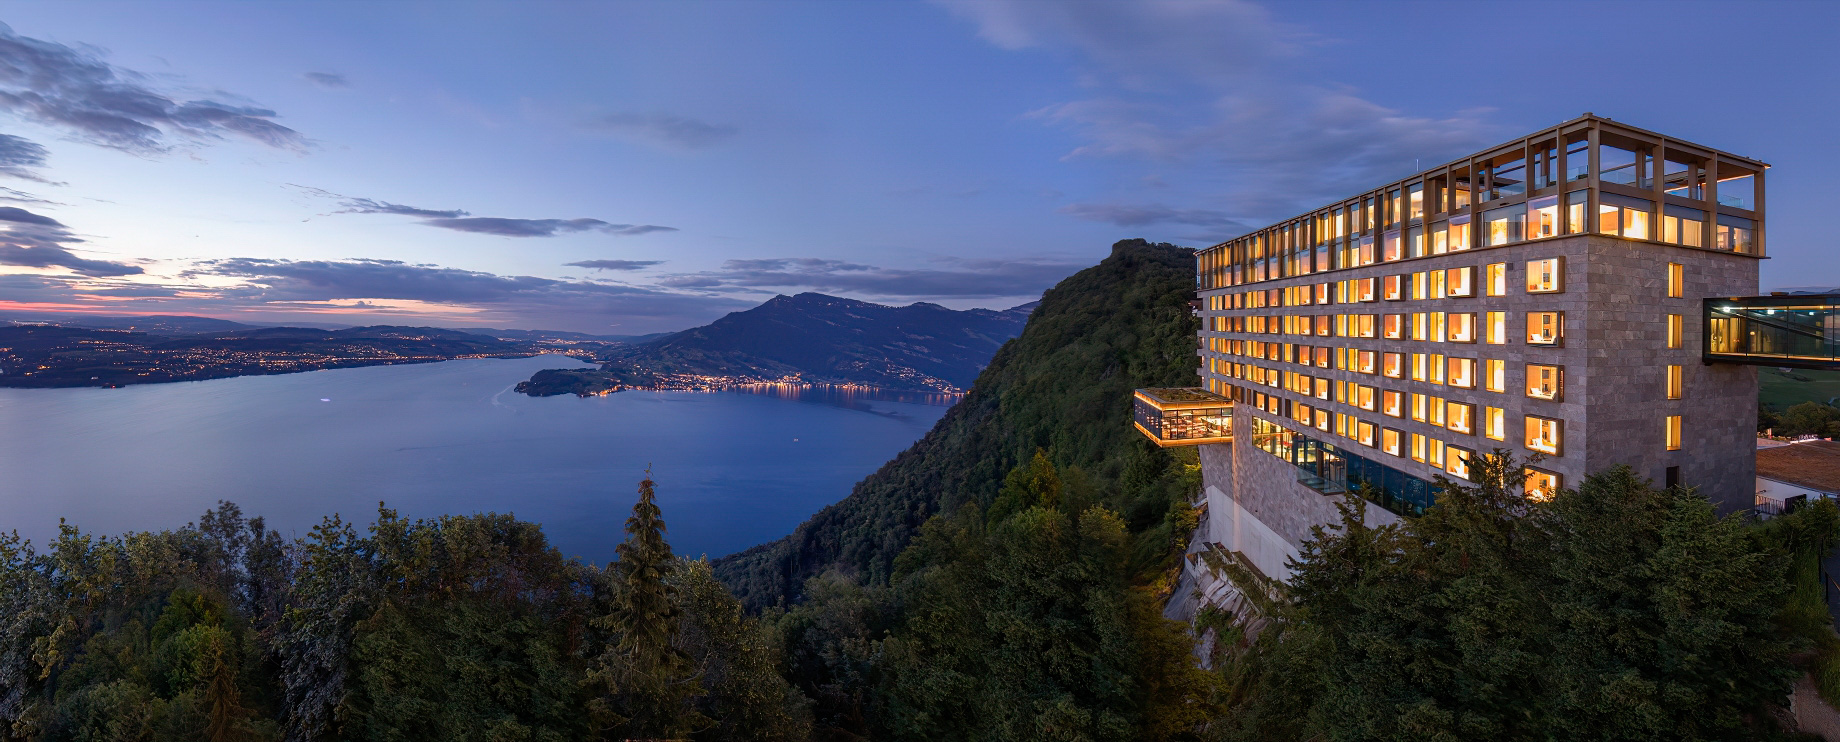 Burgenstock Hotel & Alpine Spa – Obburgen, Switzerland – Buergenstock Hotel Exterior Night